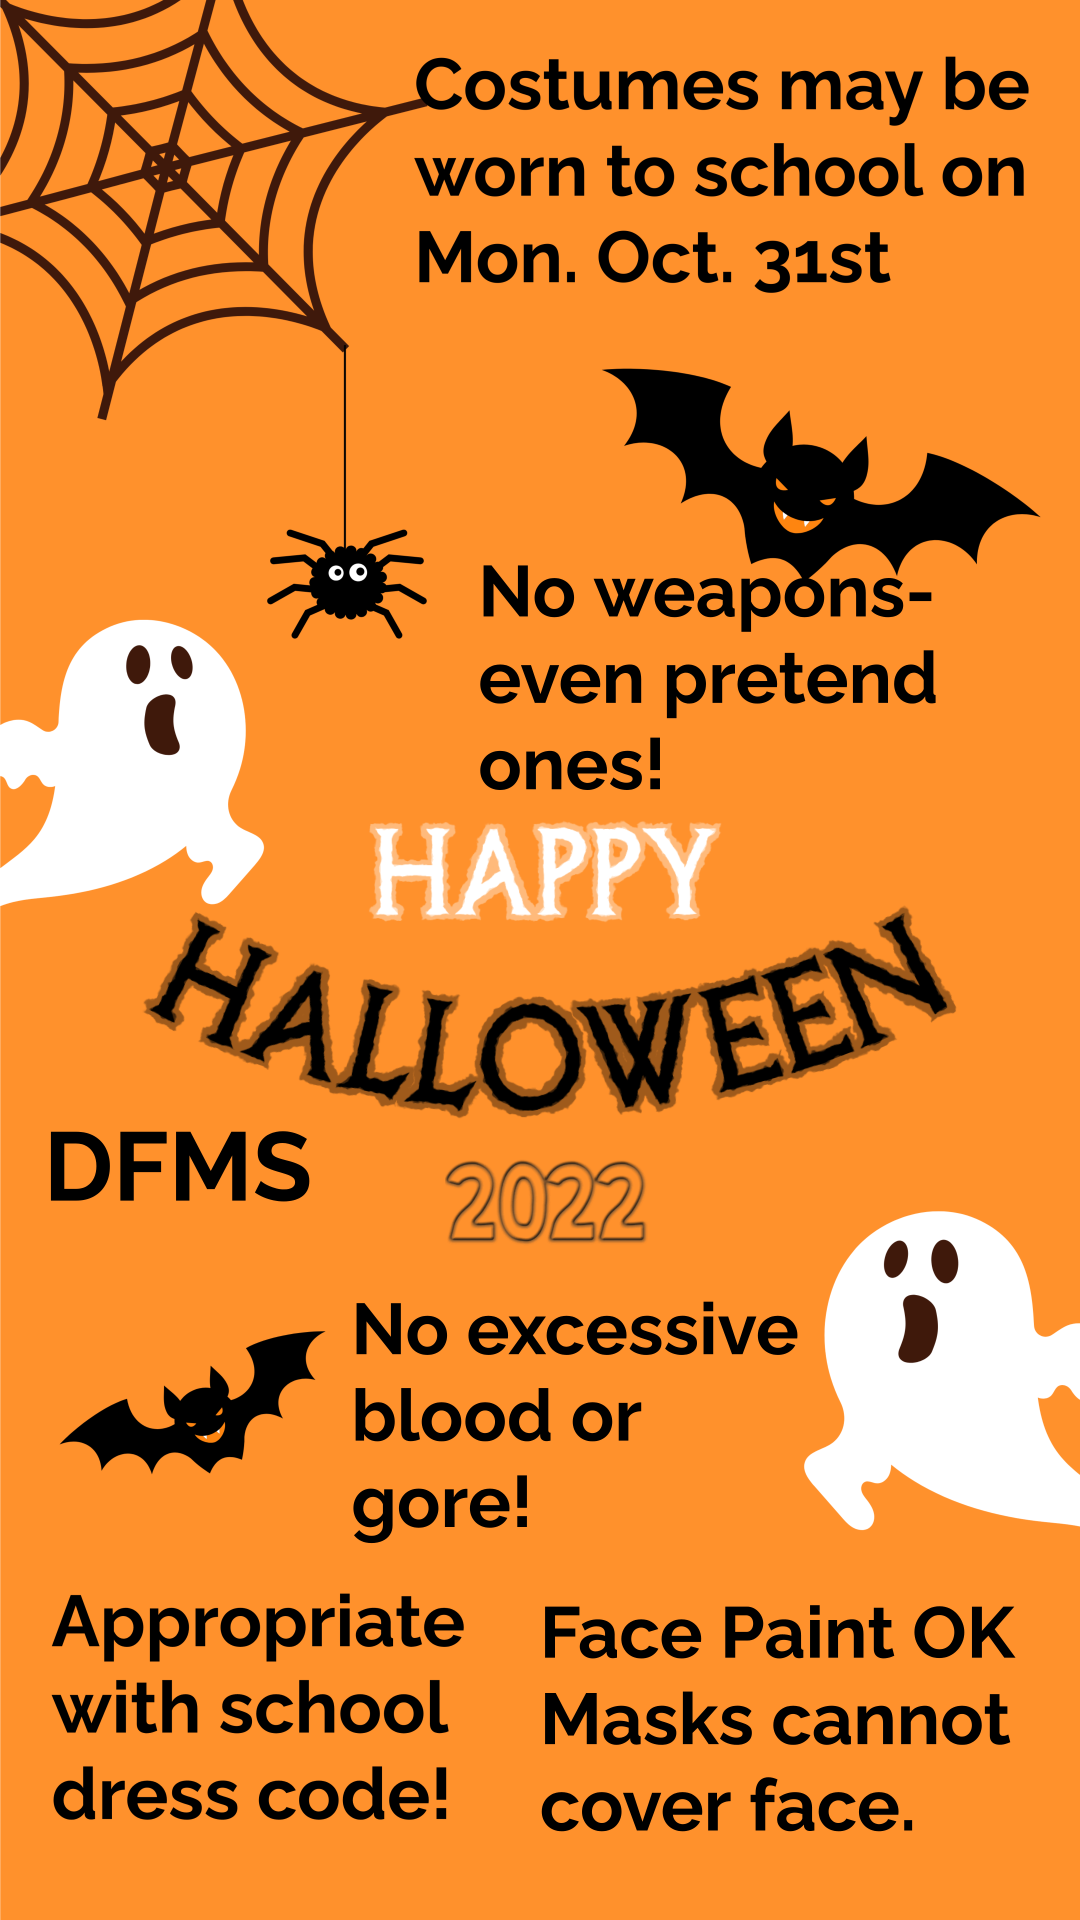 Poster explaining Halloween costumes for school